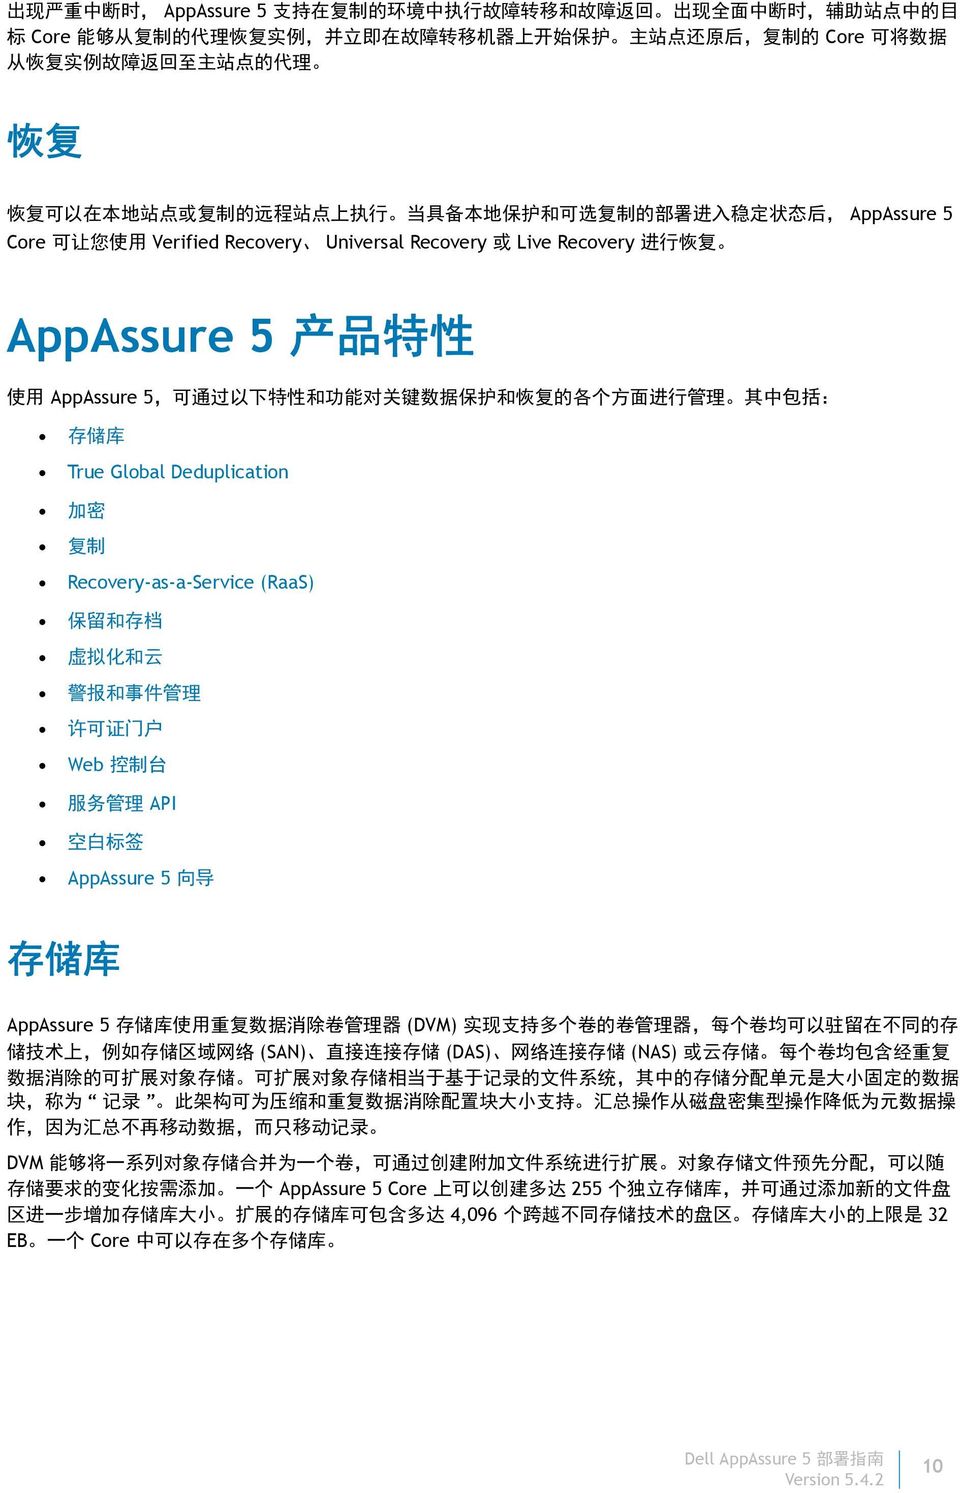 AppAssure 5 产 品 特 性 使 用 AppAssure 5, 可 通 过 以 下 特 性 和 功 能 对 关 键 数 据 保 护 和 恢 复 的 各 个 方 面 进 行 管 理 其 中 包 括 : 存 储 库 True Global Deduplication 加 密 复 制 Recovery-as-a-Service (RaaS) 保 留 和 存 档 虚 拟 化 和 云 警 报 和